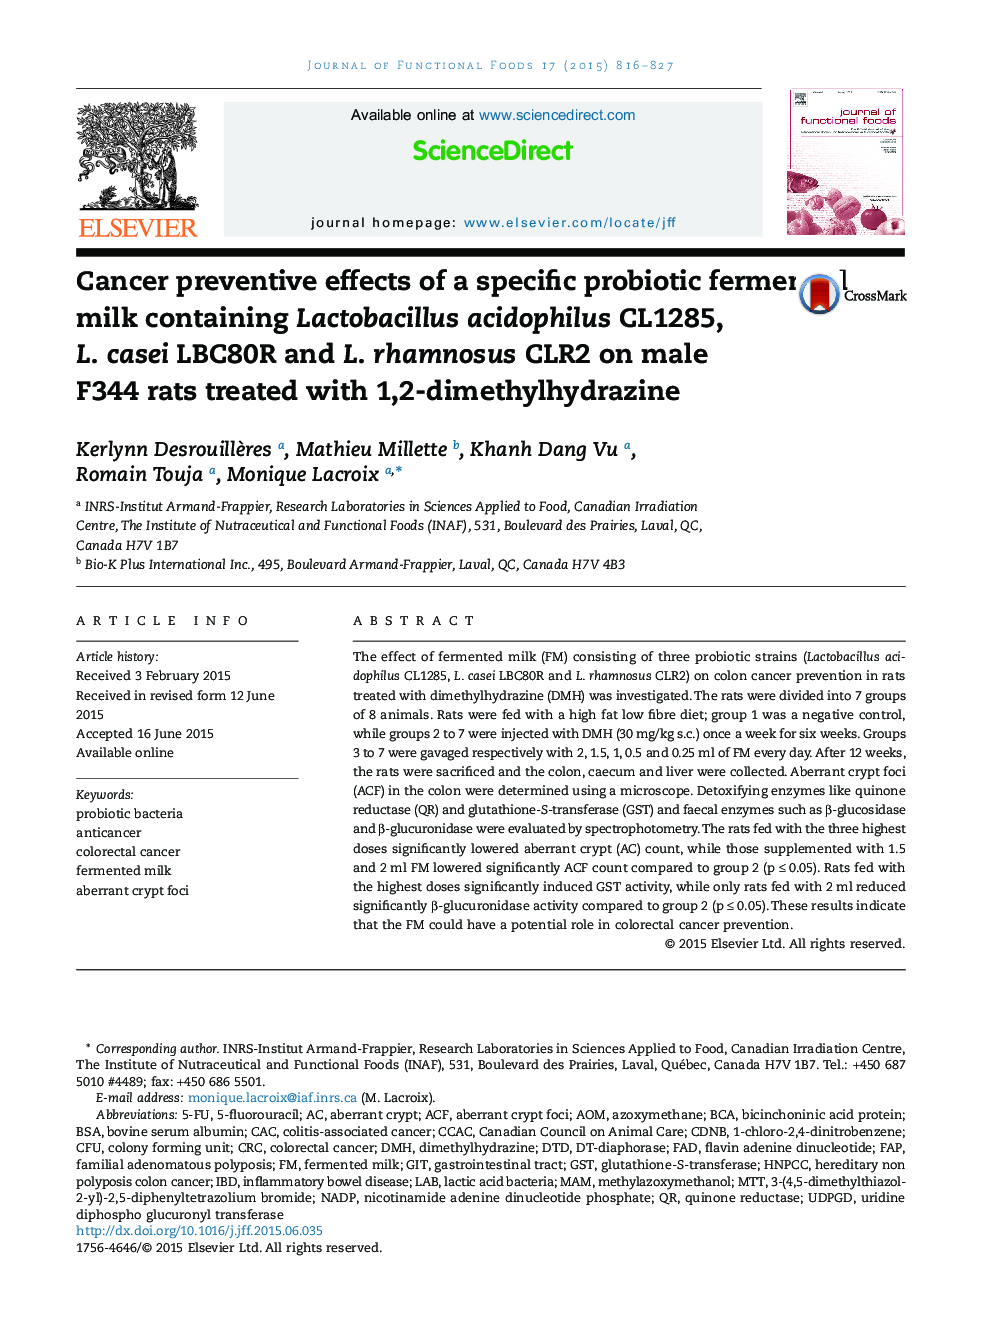 Cancer preventive effects of a specific probiotic fermented milk containing Lactobacillus acidophilus CL1285, L.âcasei LBC80R and L.ârhamnosus CLR2 on male F344 rats treated with 1,2-dimethylhydrazine